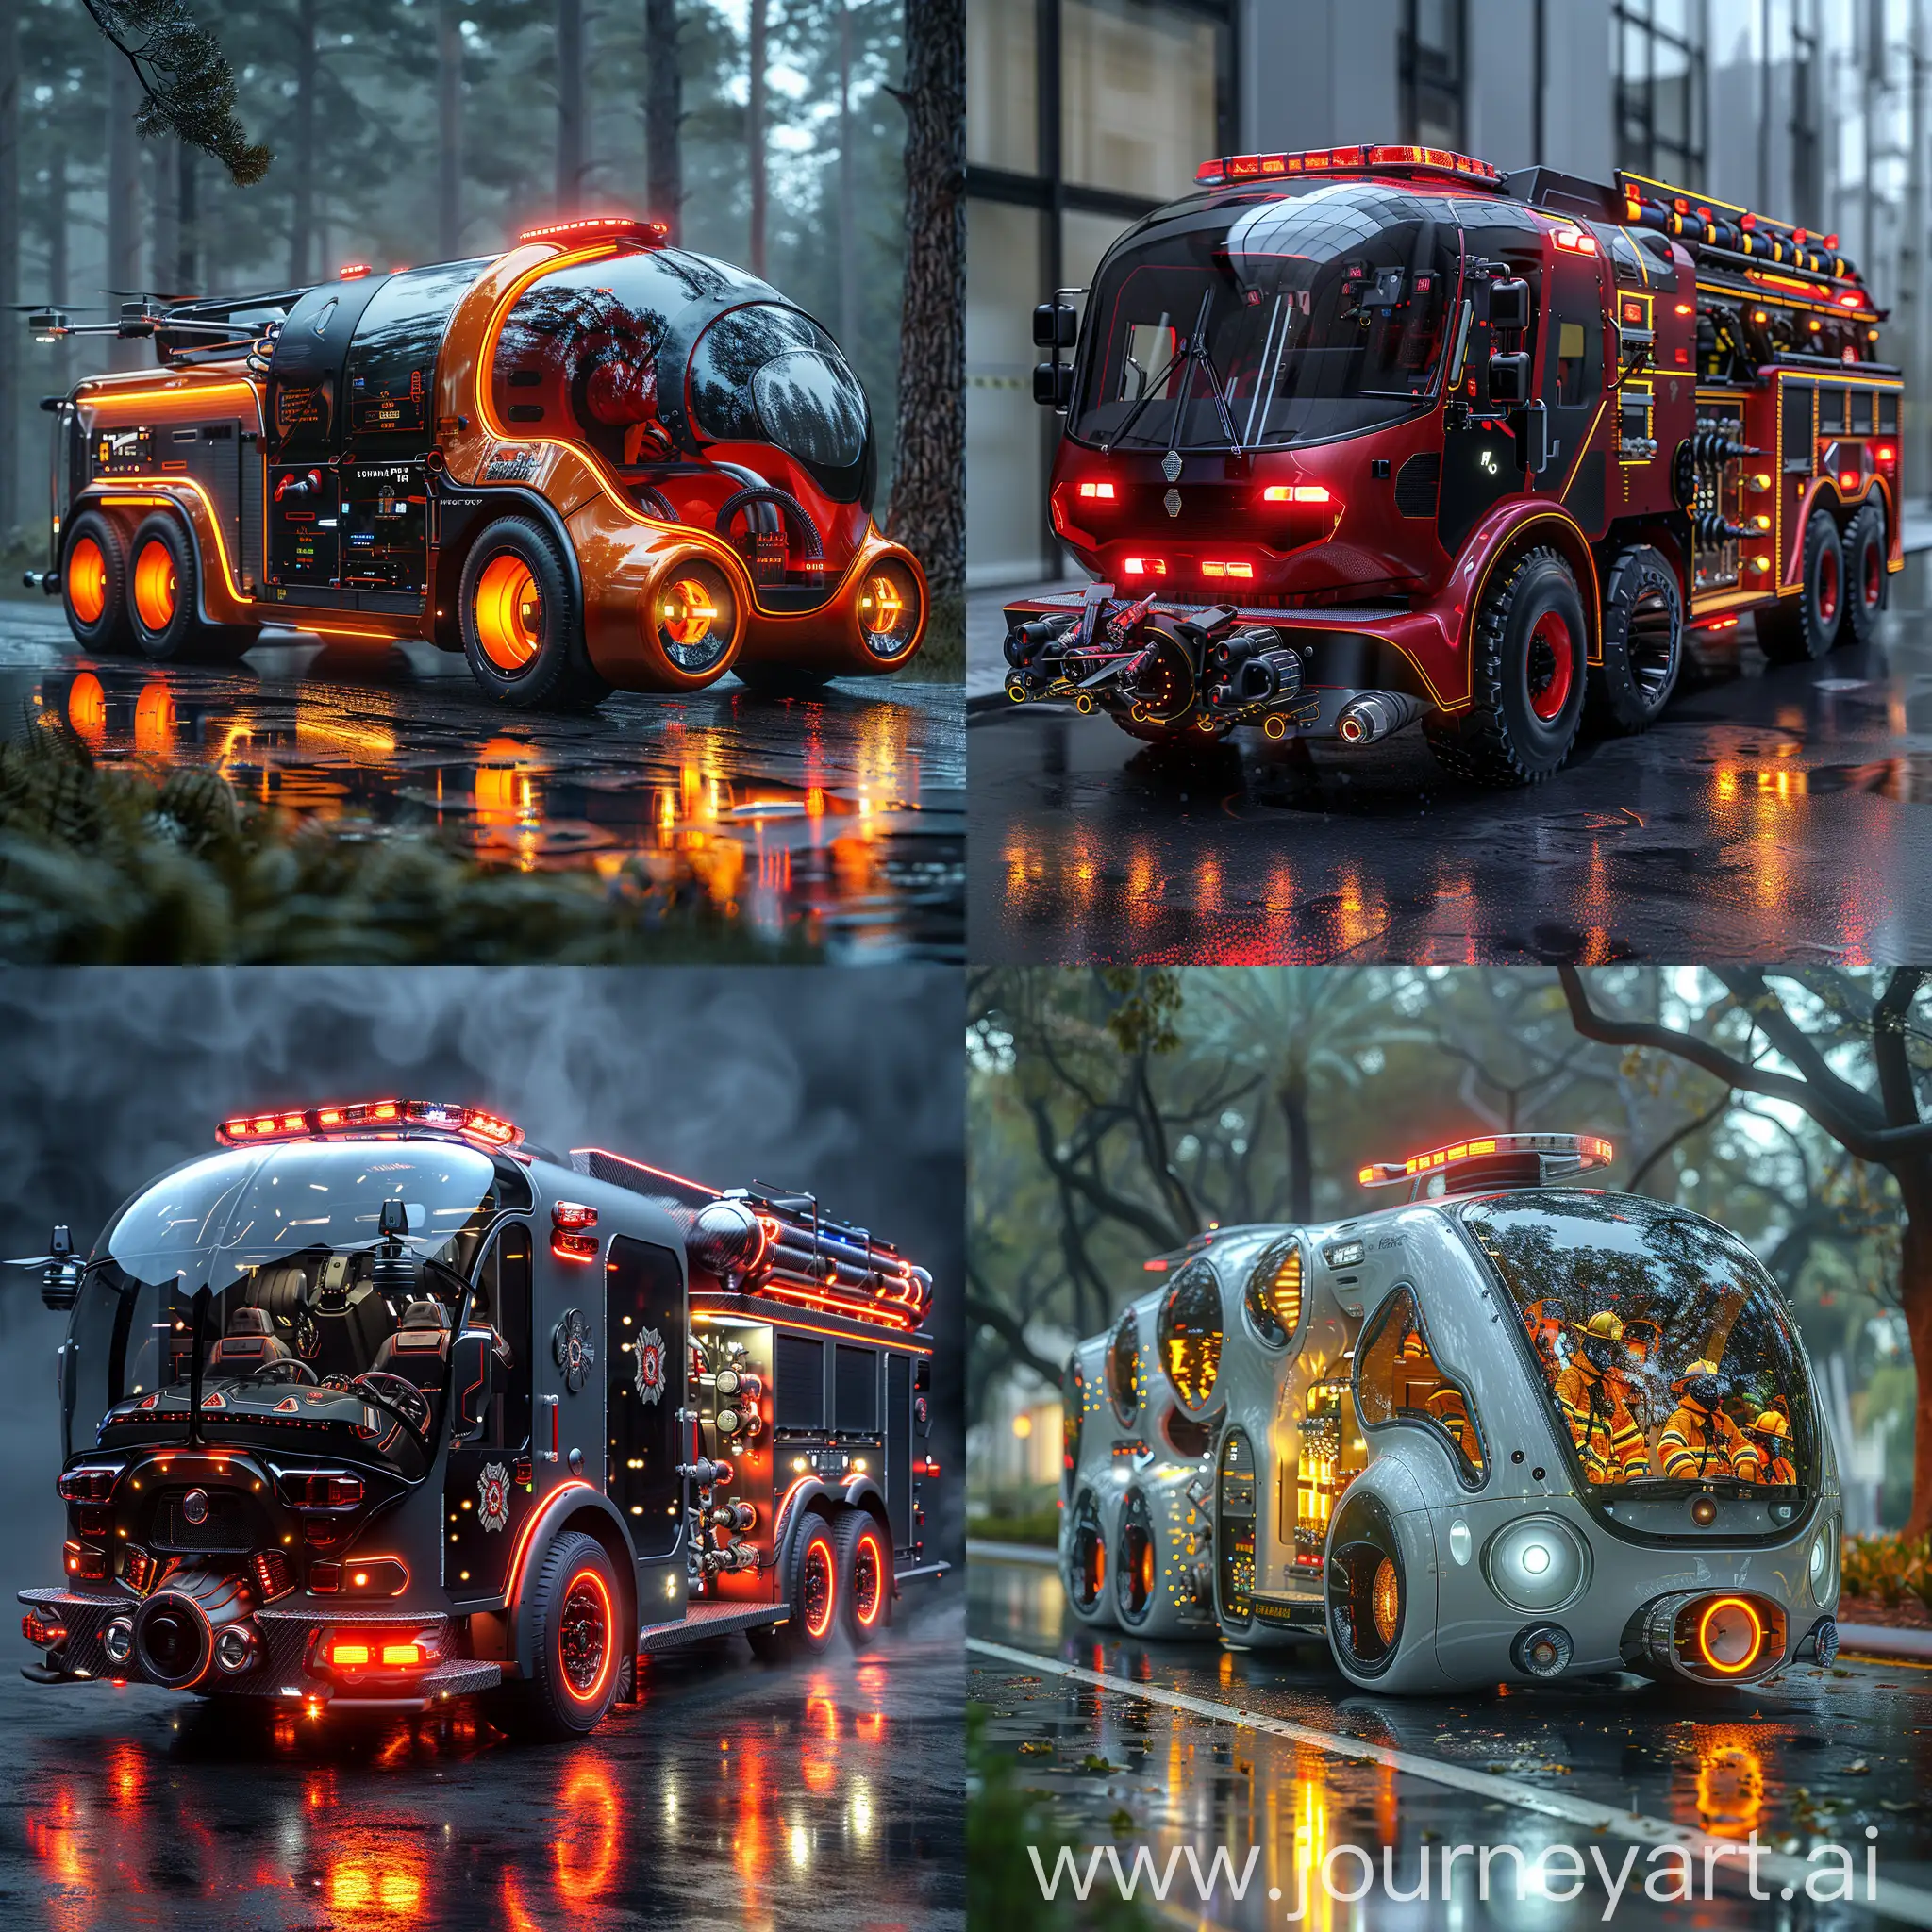 Futuristic-Fire-Truck-Advanced-Autonomous-Navigation-and-Robotic-Firefighters